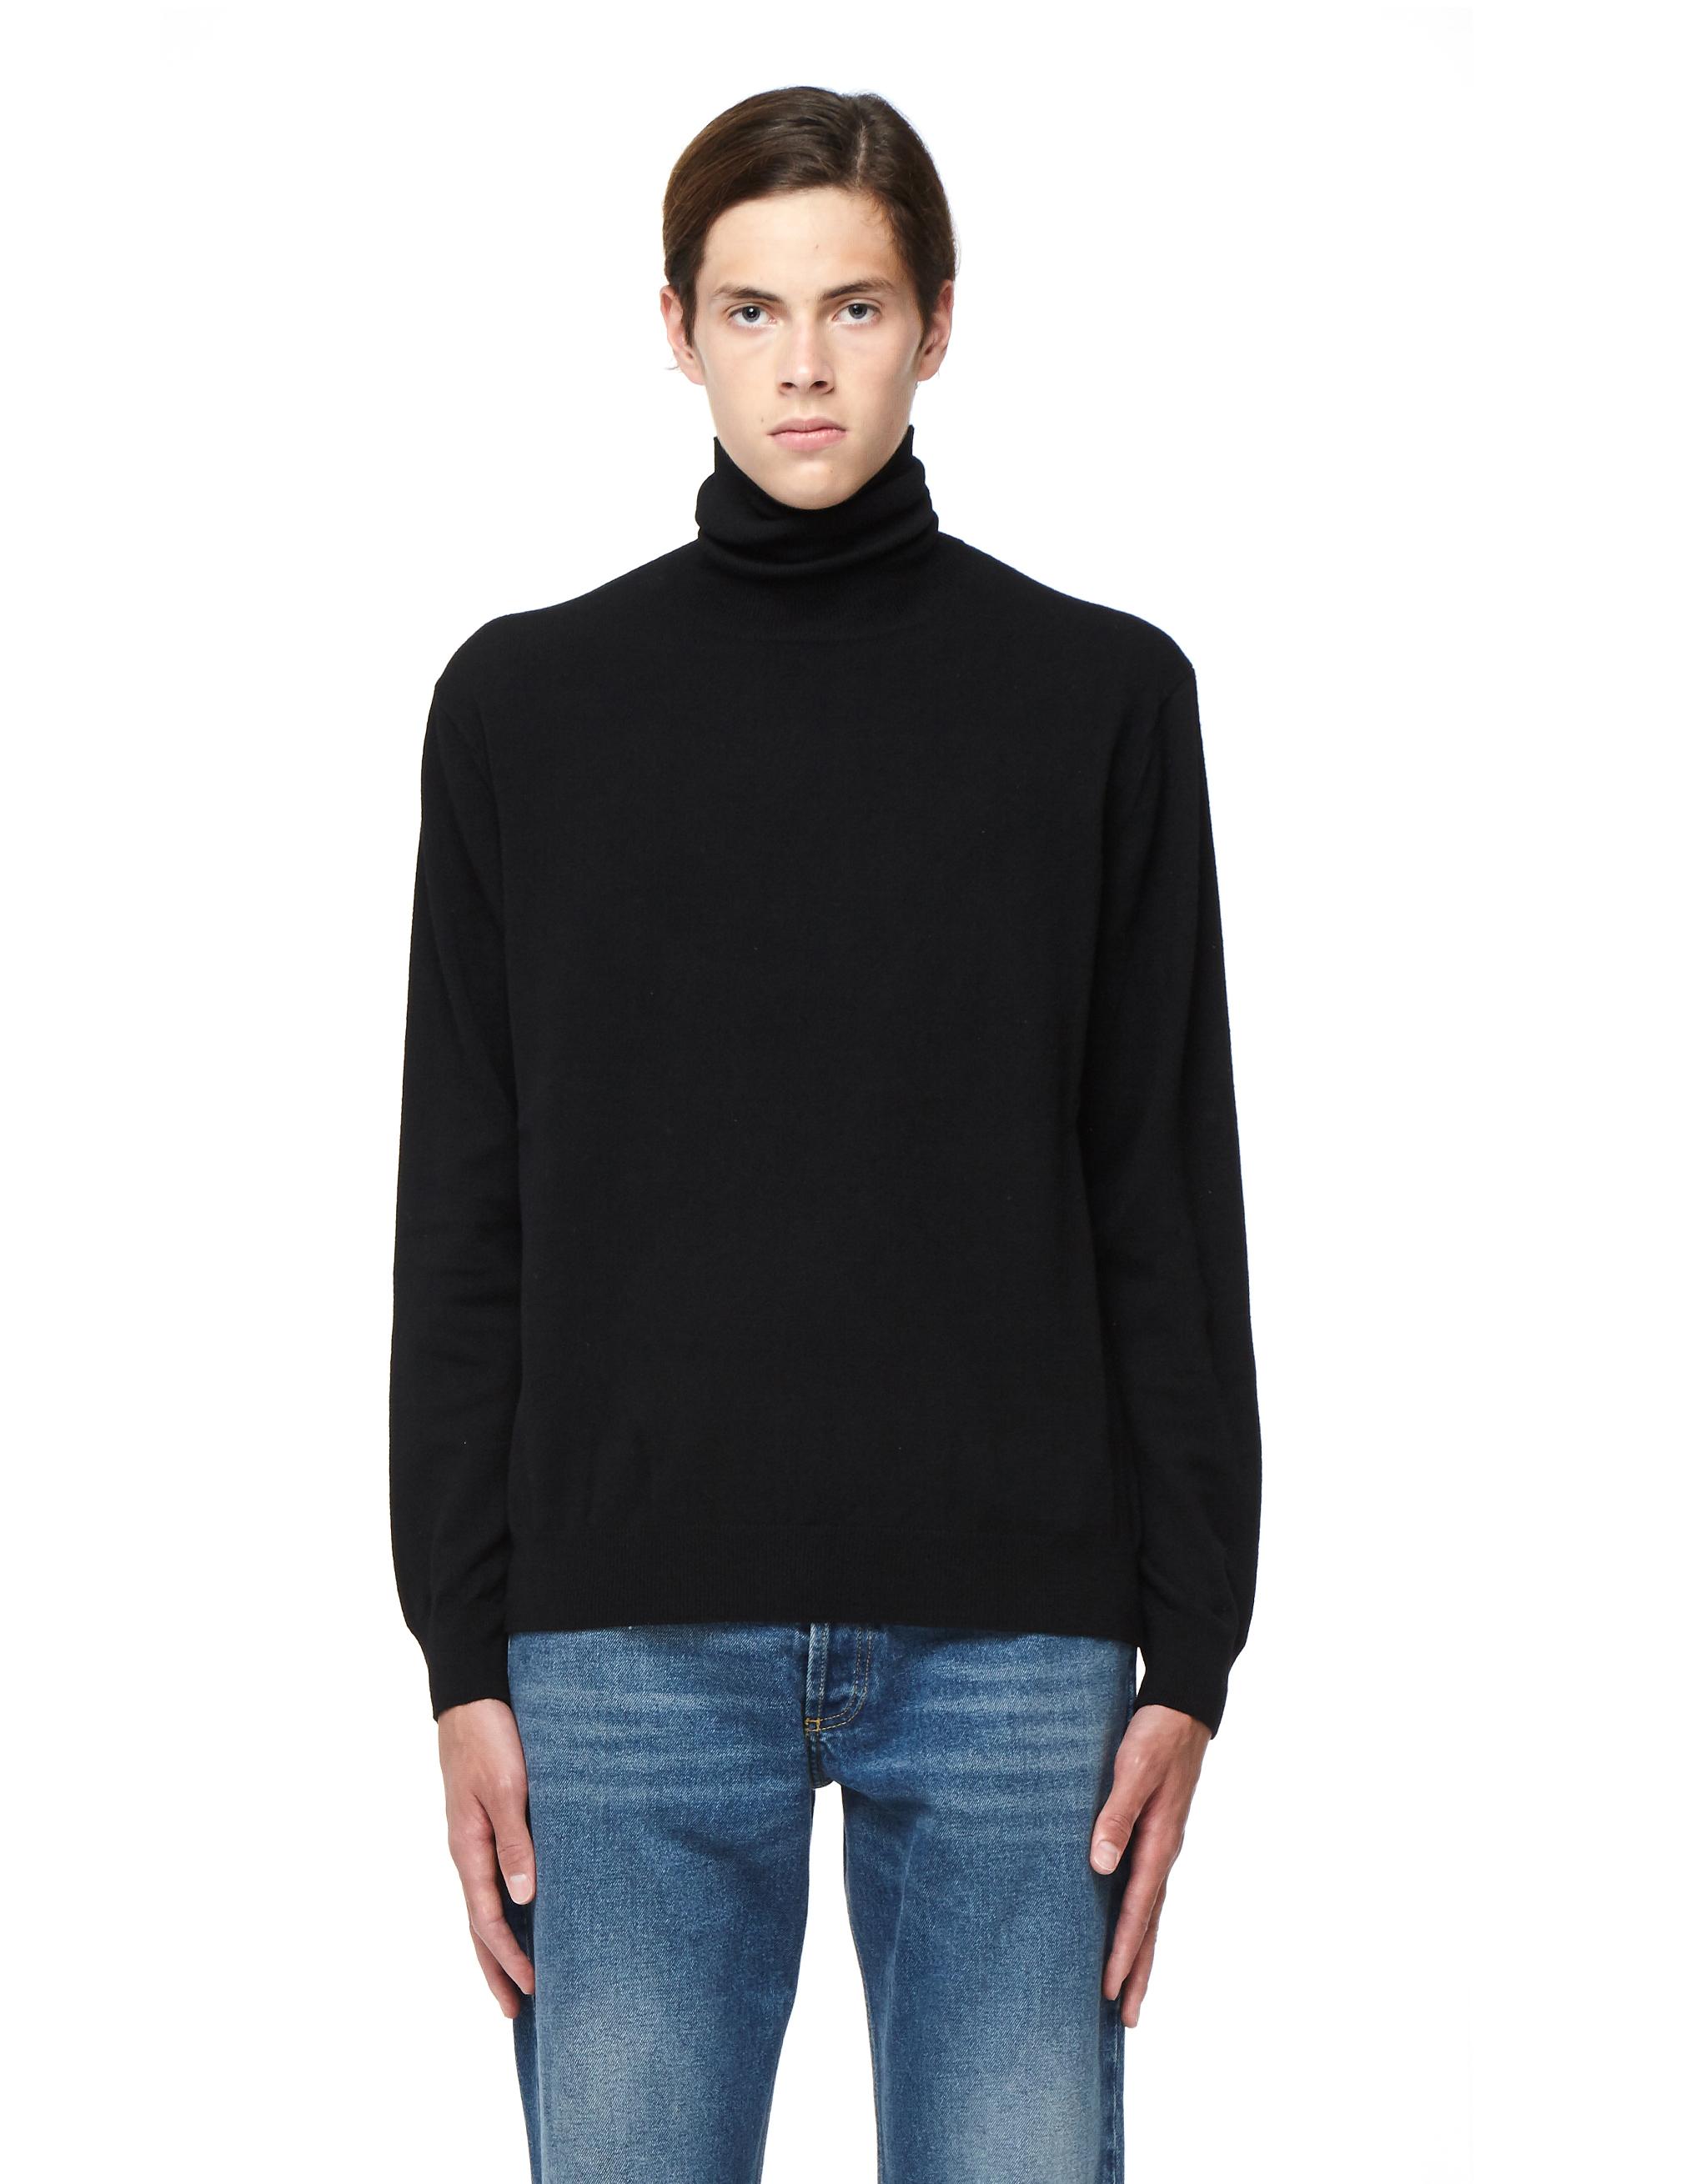 Lyst - Balenciaga Wool Turtleneck in Black for Men